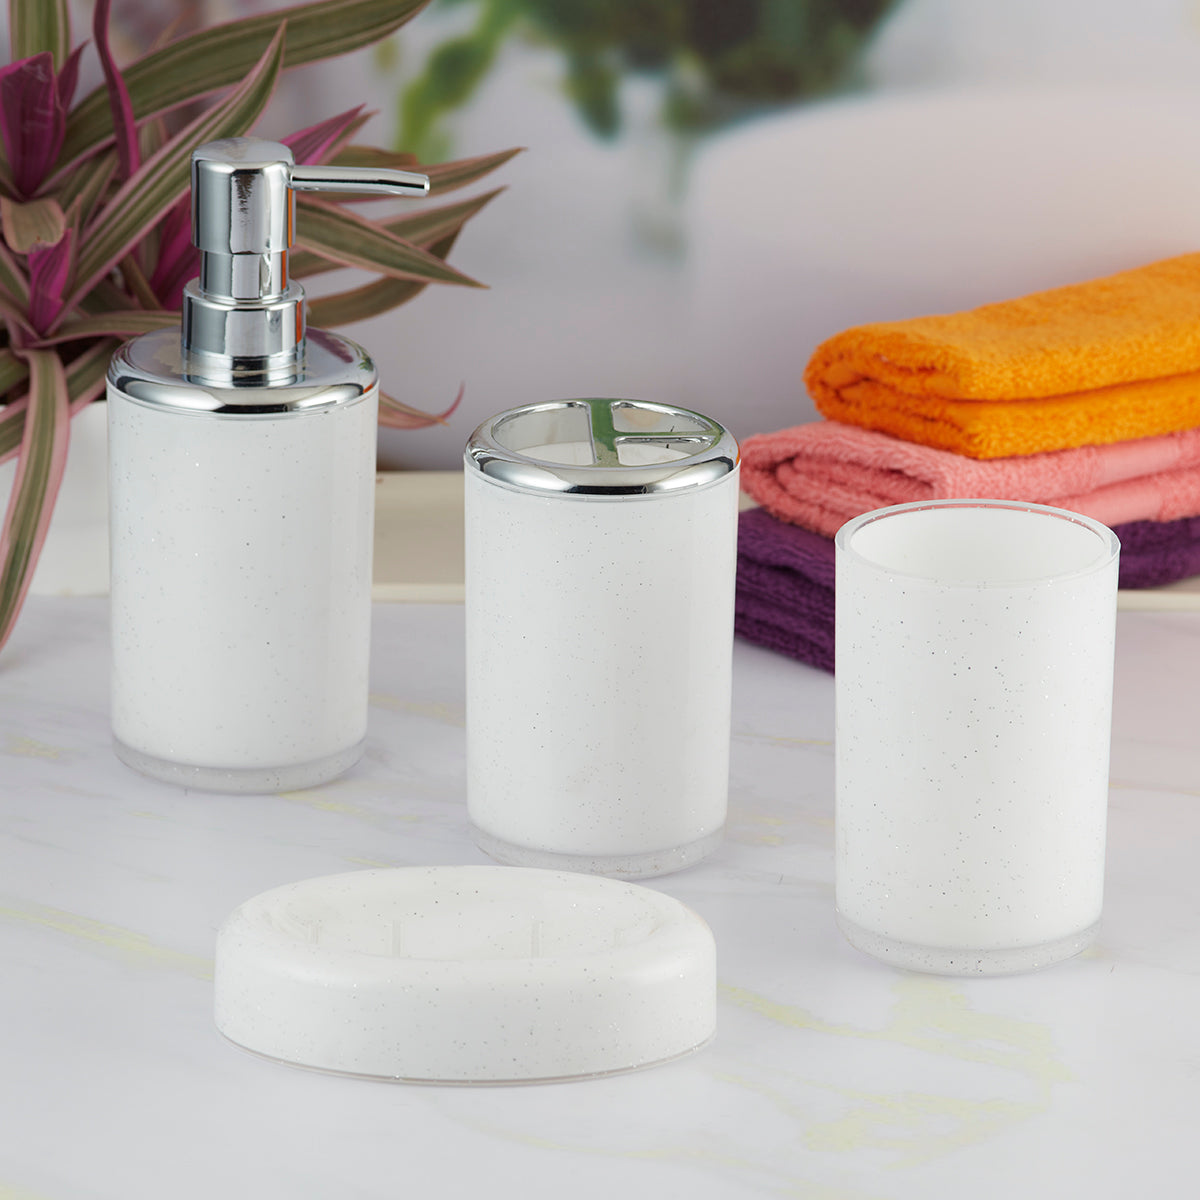 Acrylic Bathroom Accessories Set of 4 Bath Set with Soap Dispenser (10047)